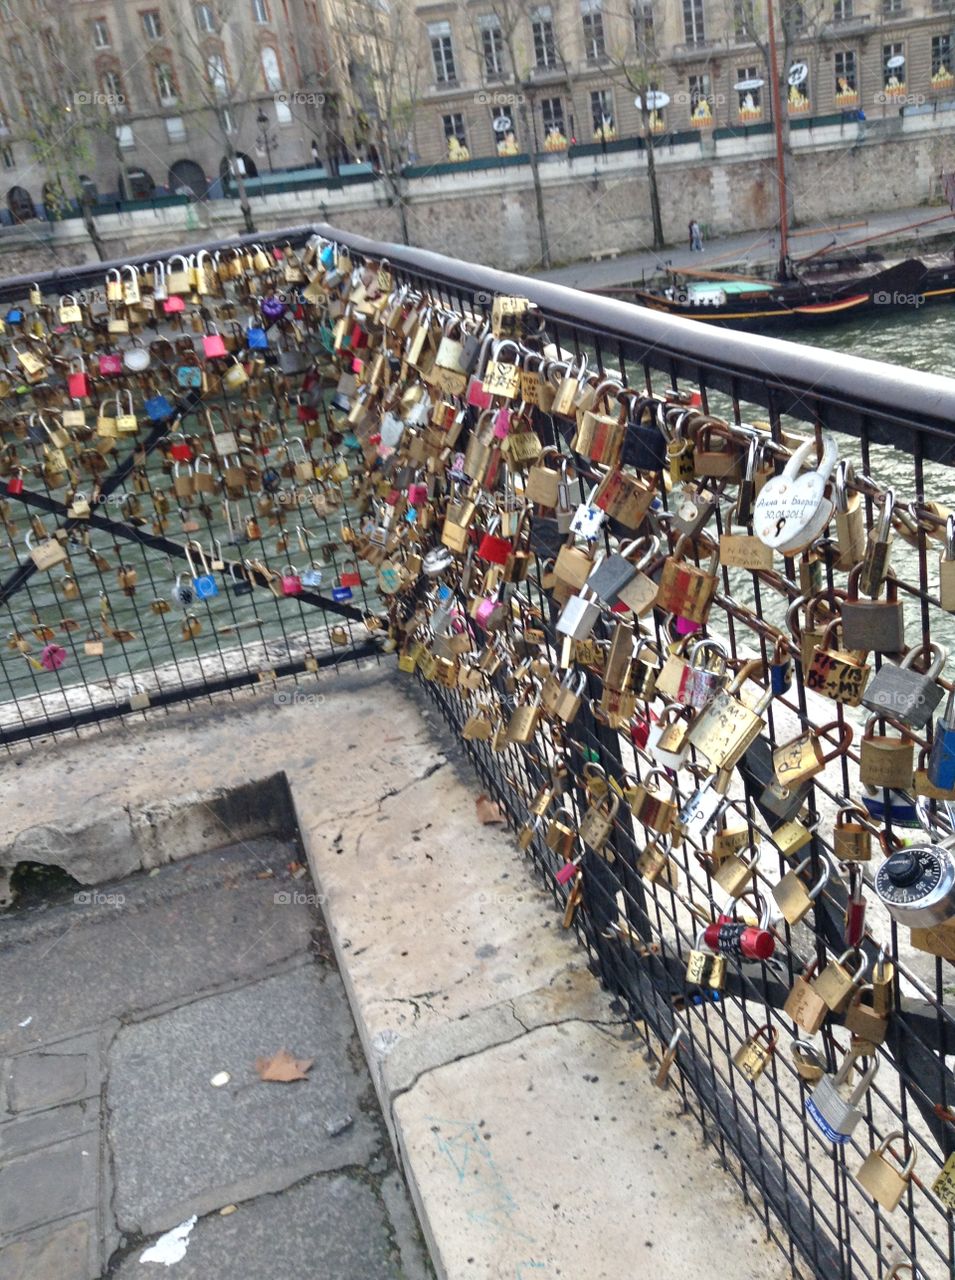 Bridge of locks . Bridge of love